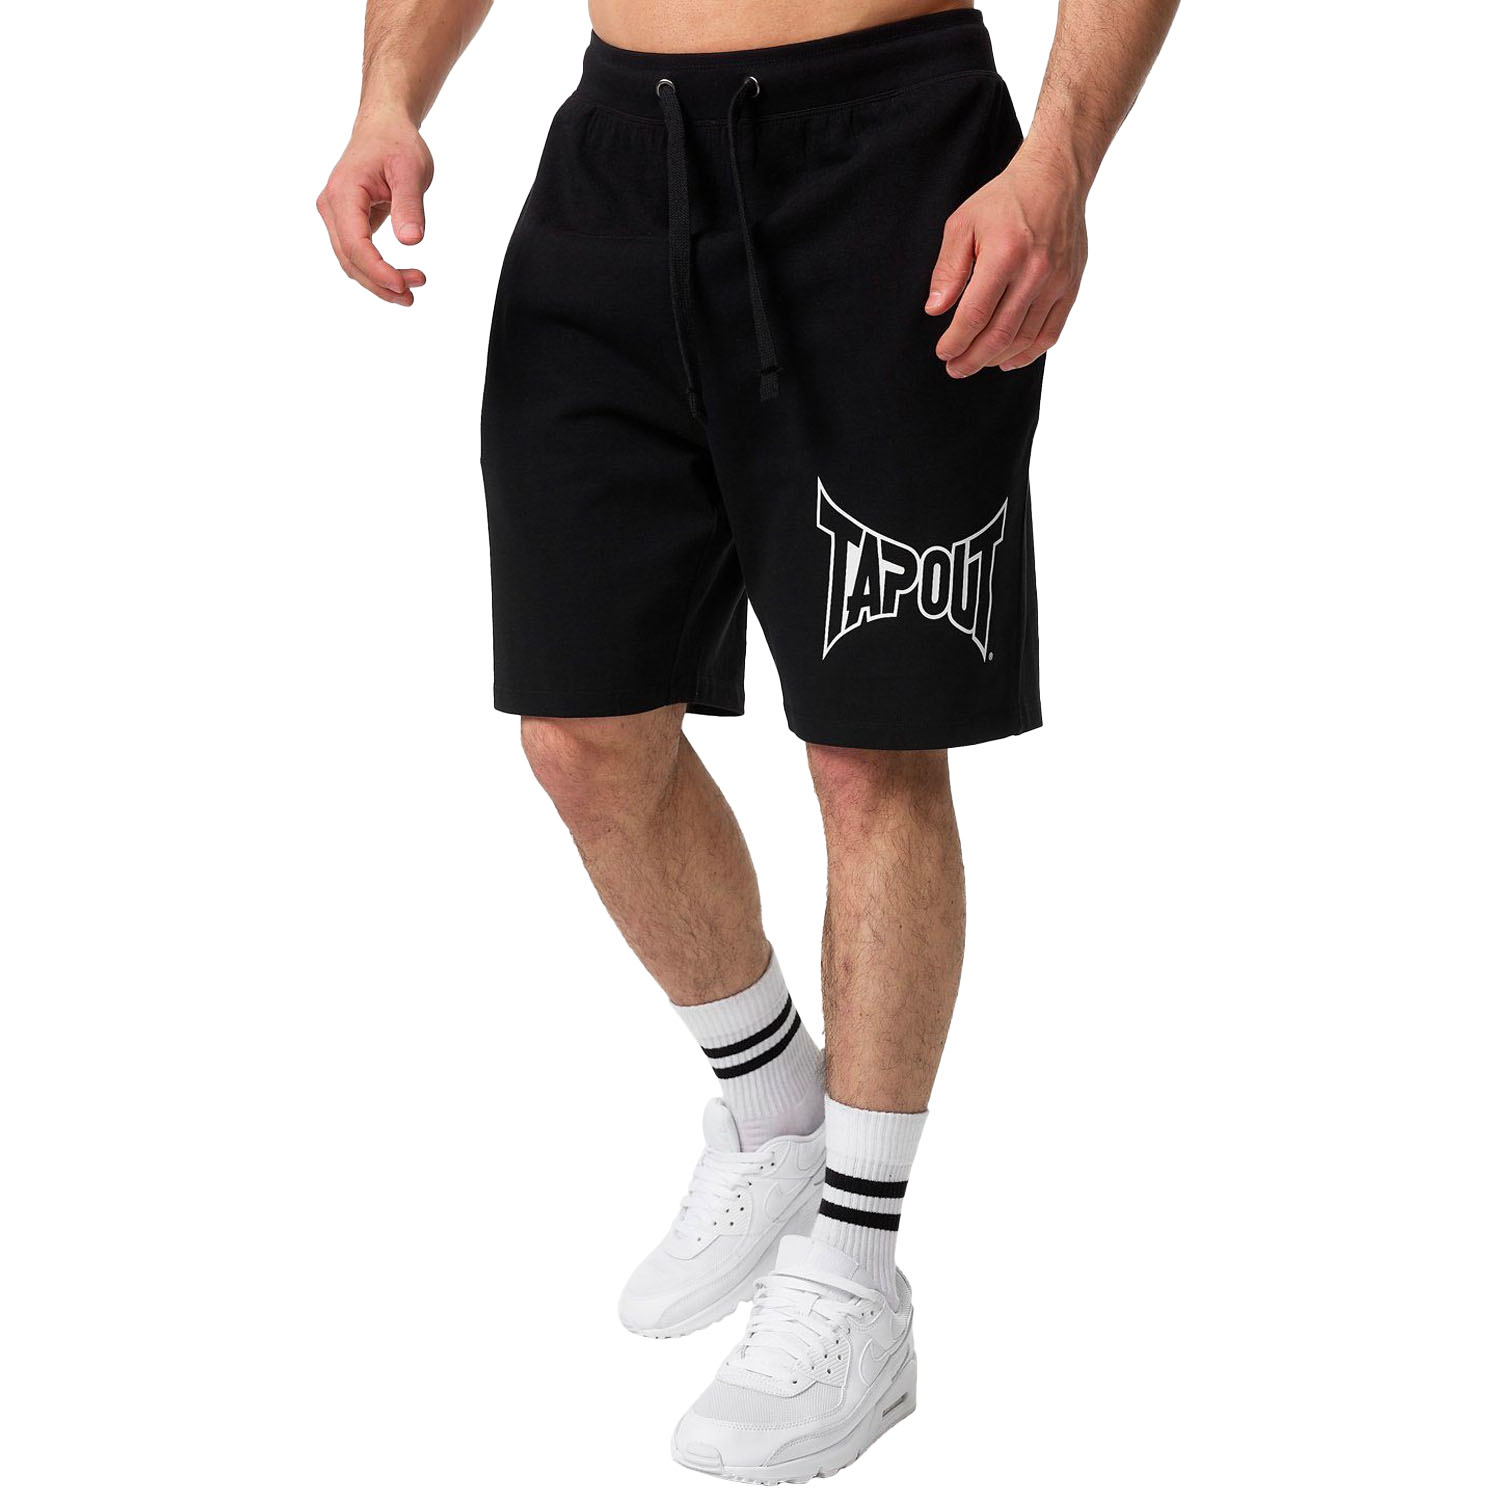 Tapout Fitness Shorts, Lifestyle Basic, black-white